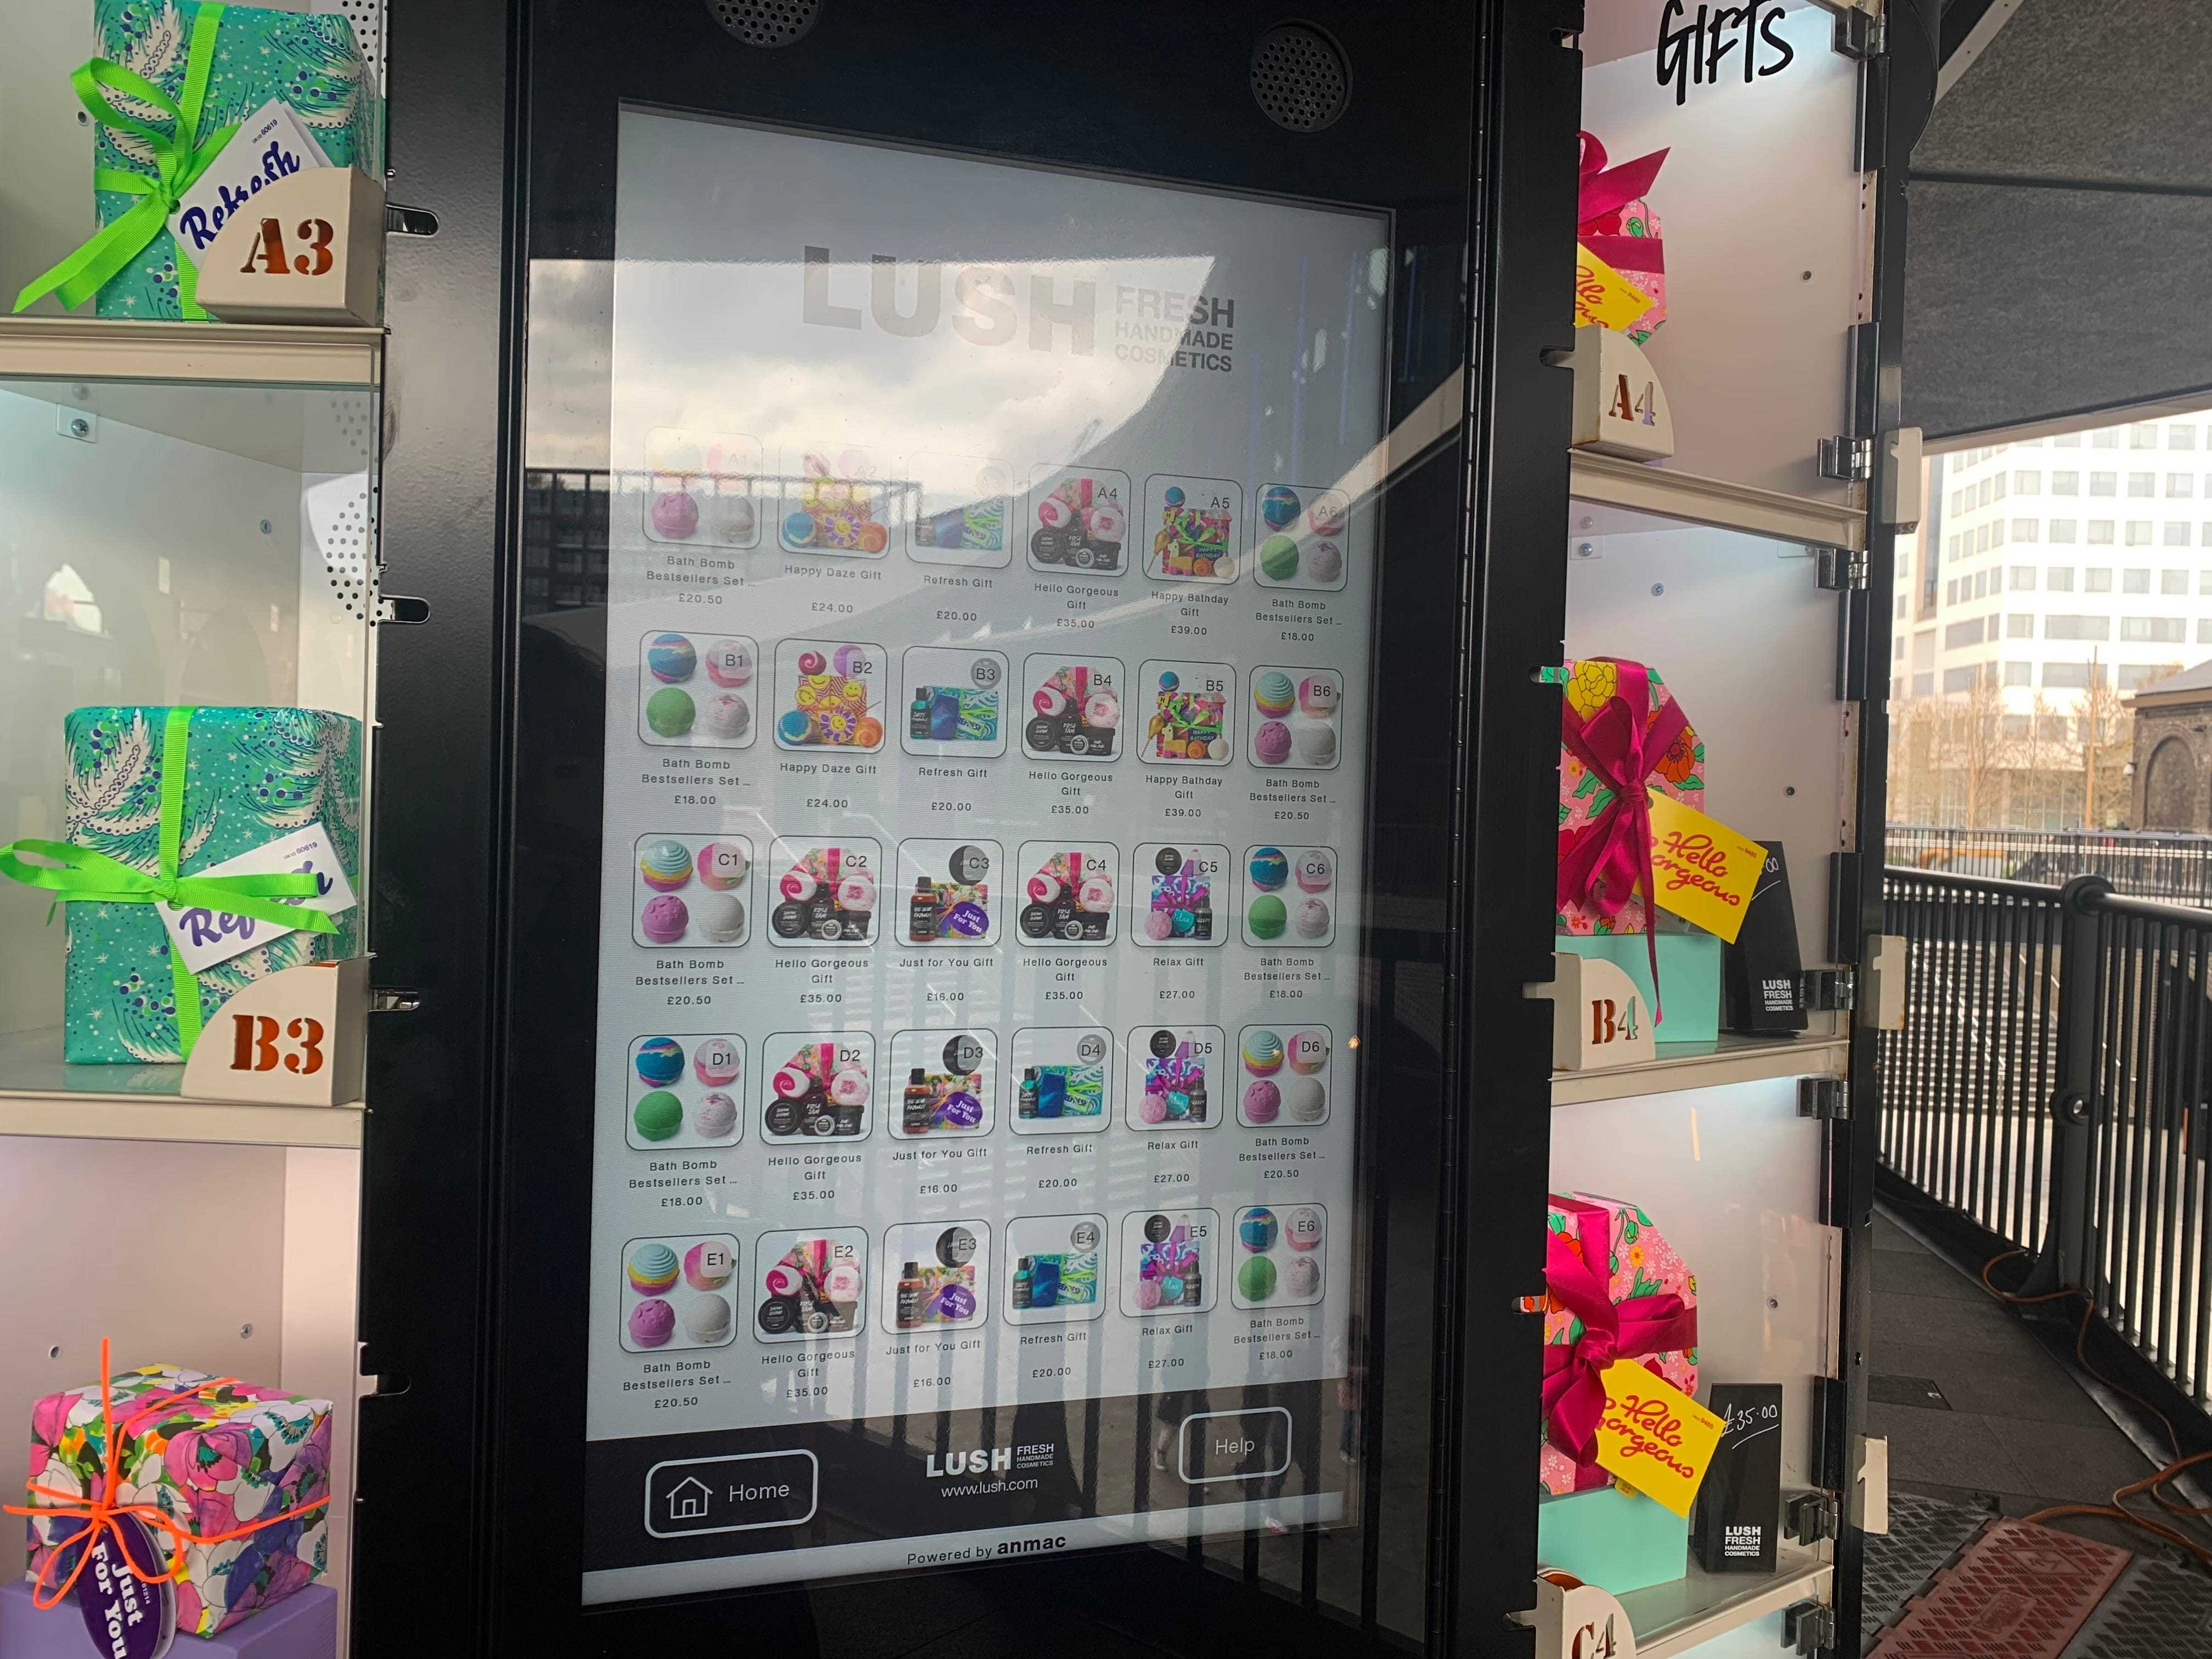 Der Lush-Automat in London.